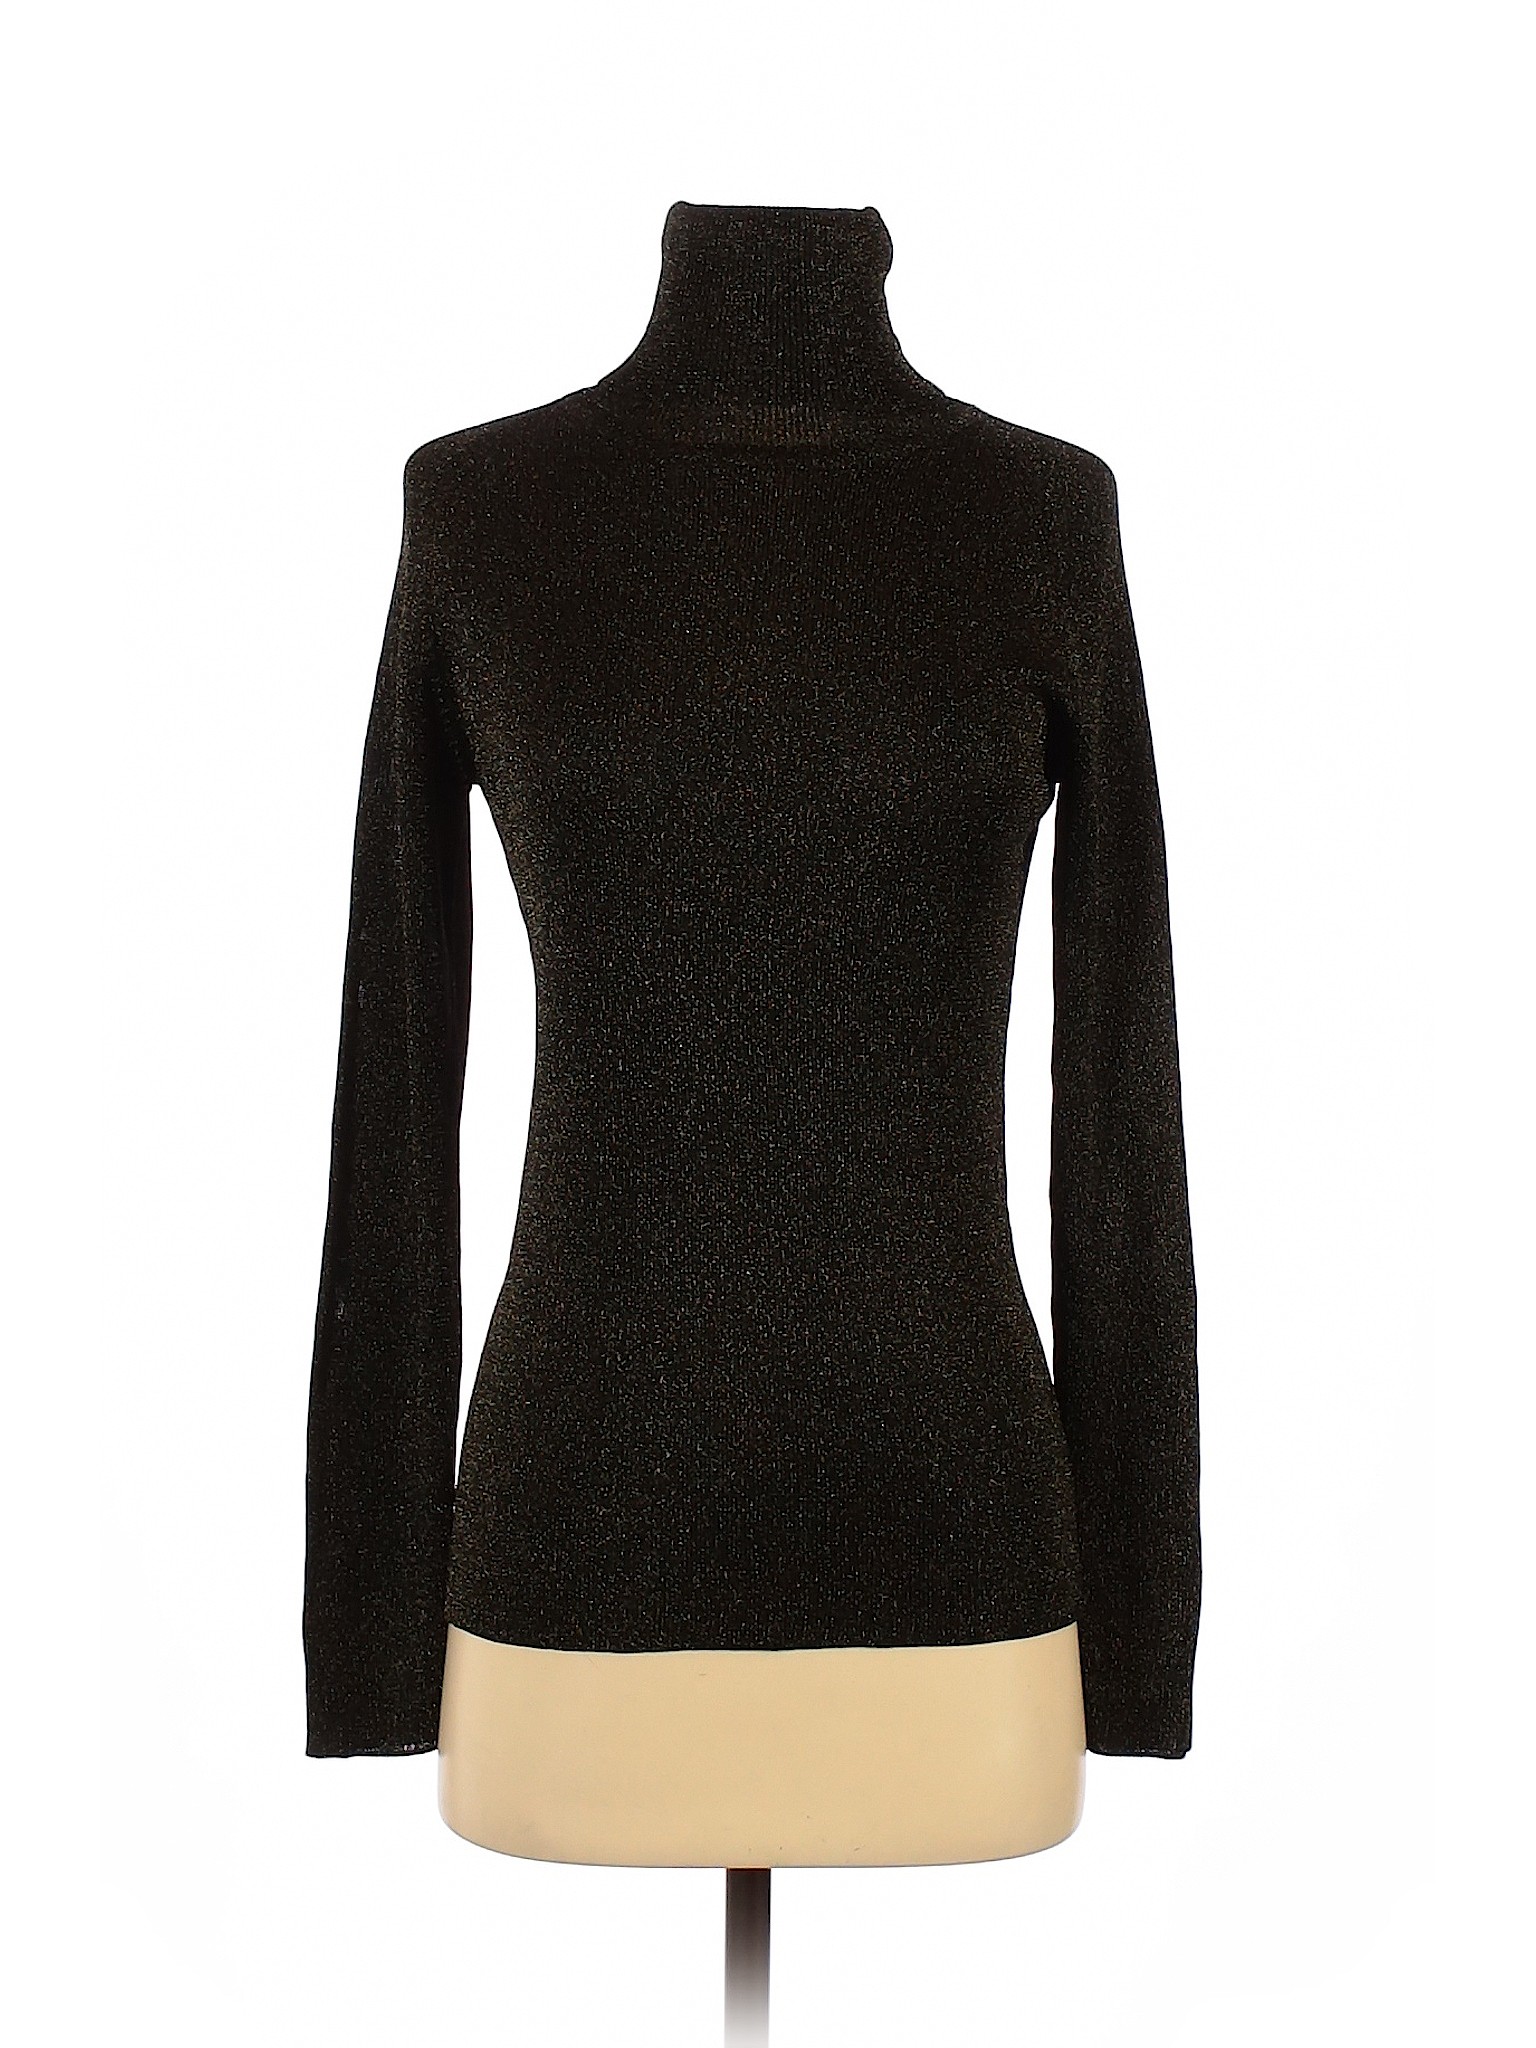 Linda Allard Ellen Tracy Women Black Turtleneck Sweater P Petites | eBay